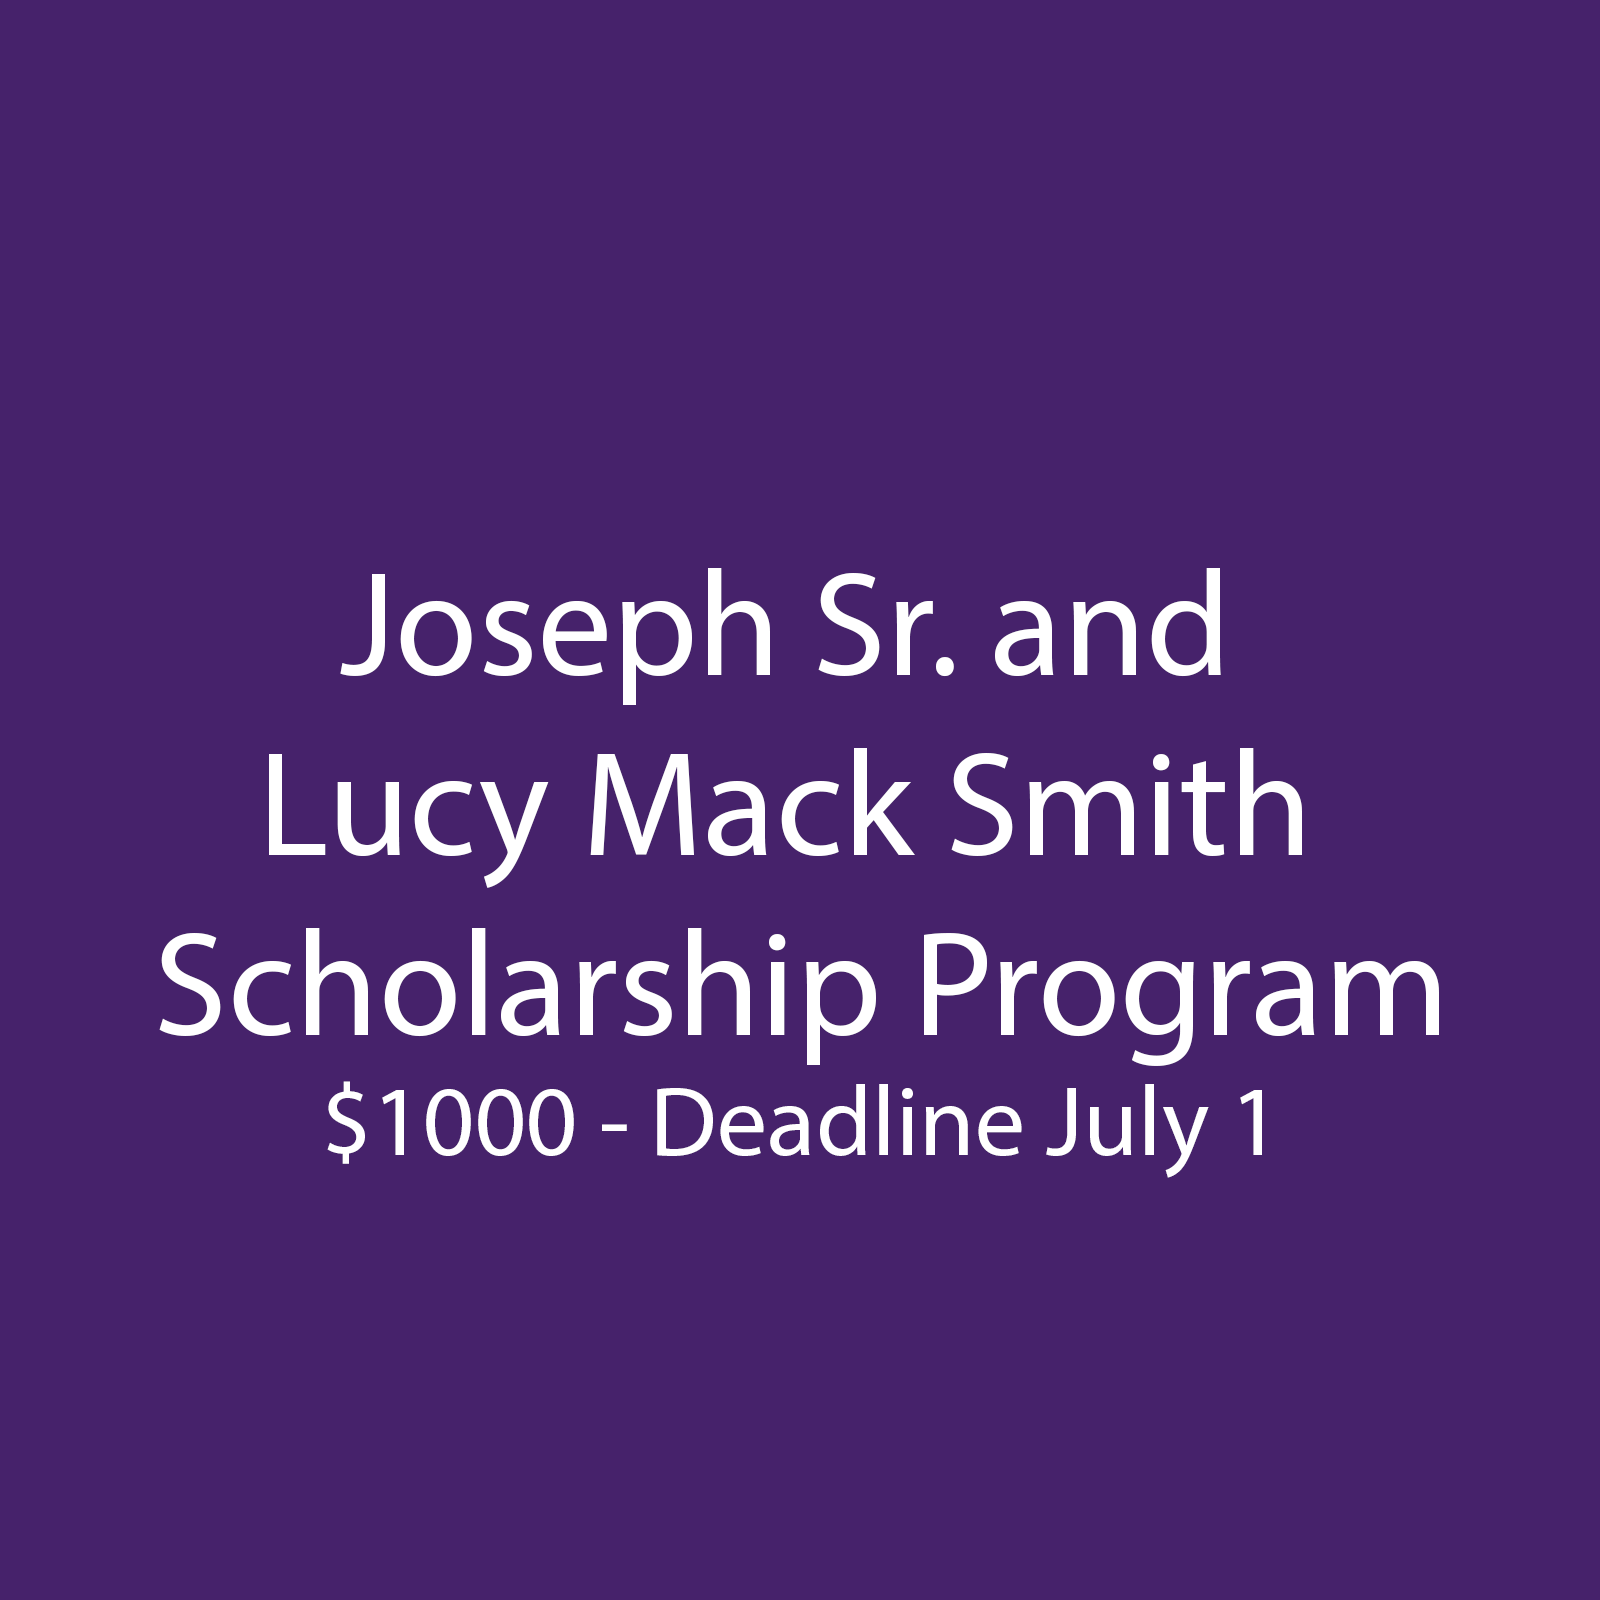 Joseph Sr. and Lucy Mack Smith Scholarship Program